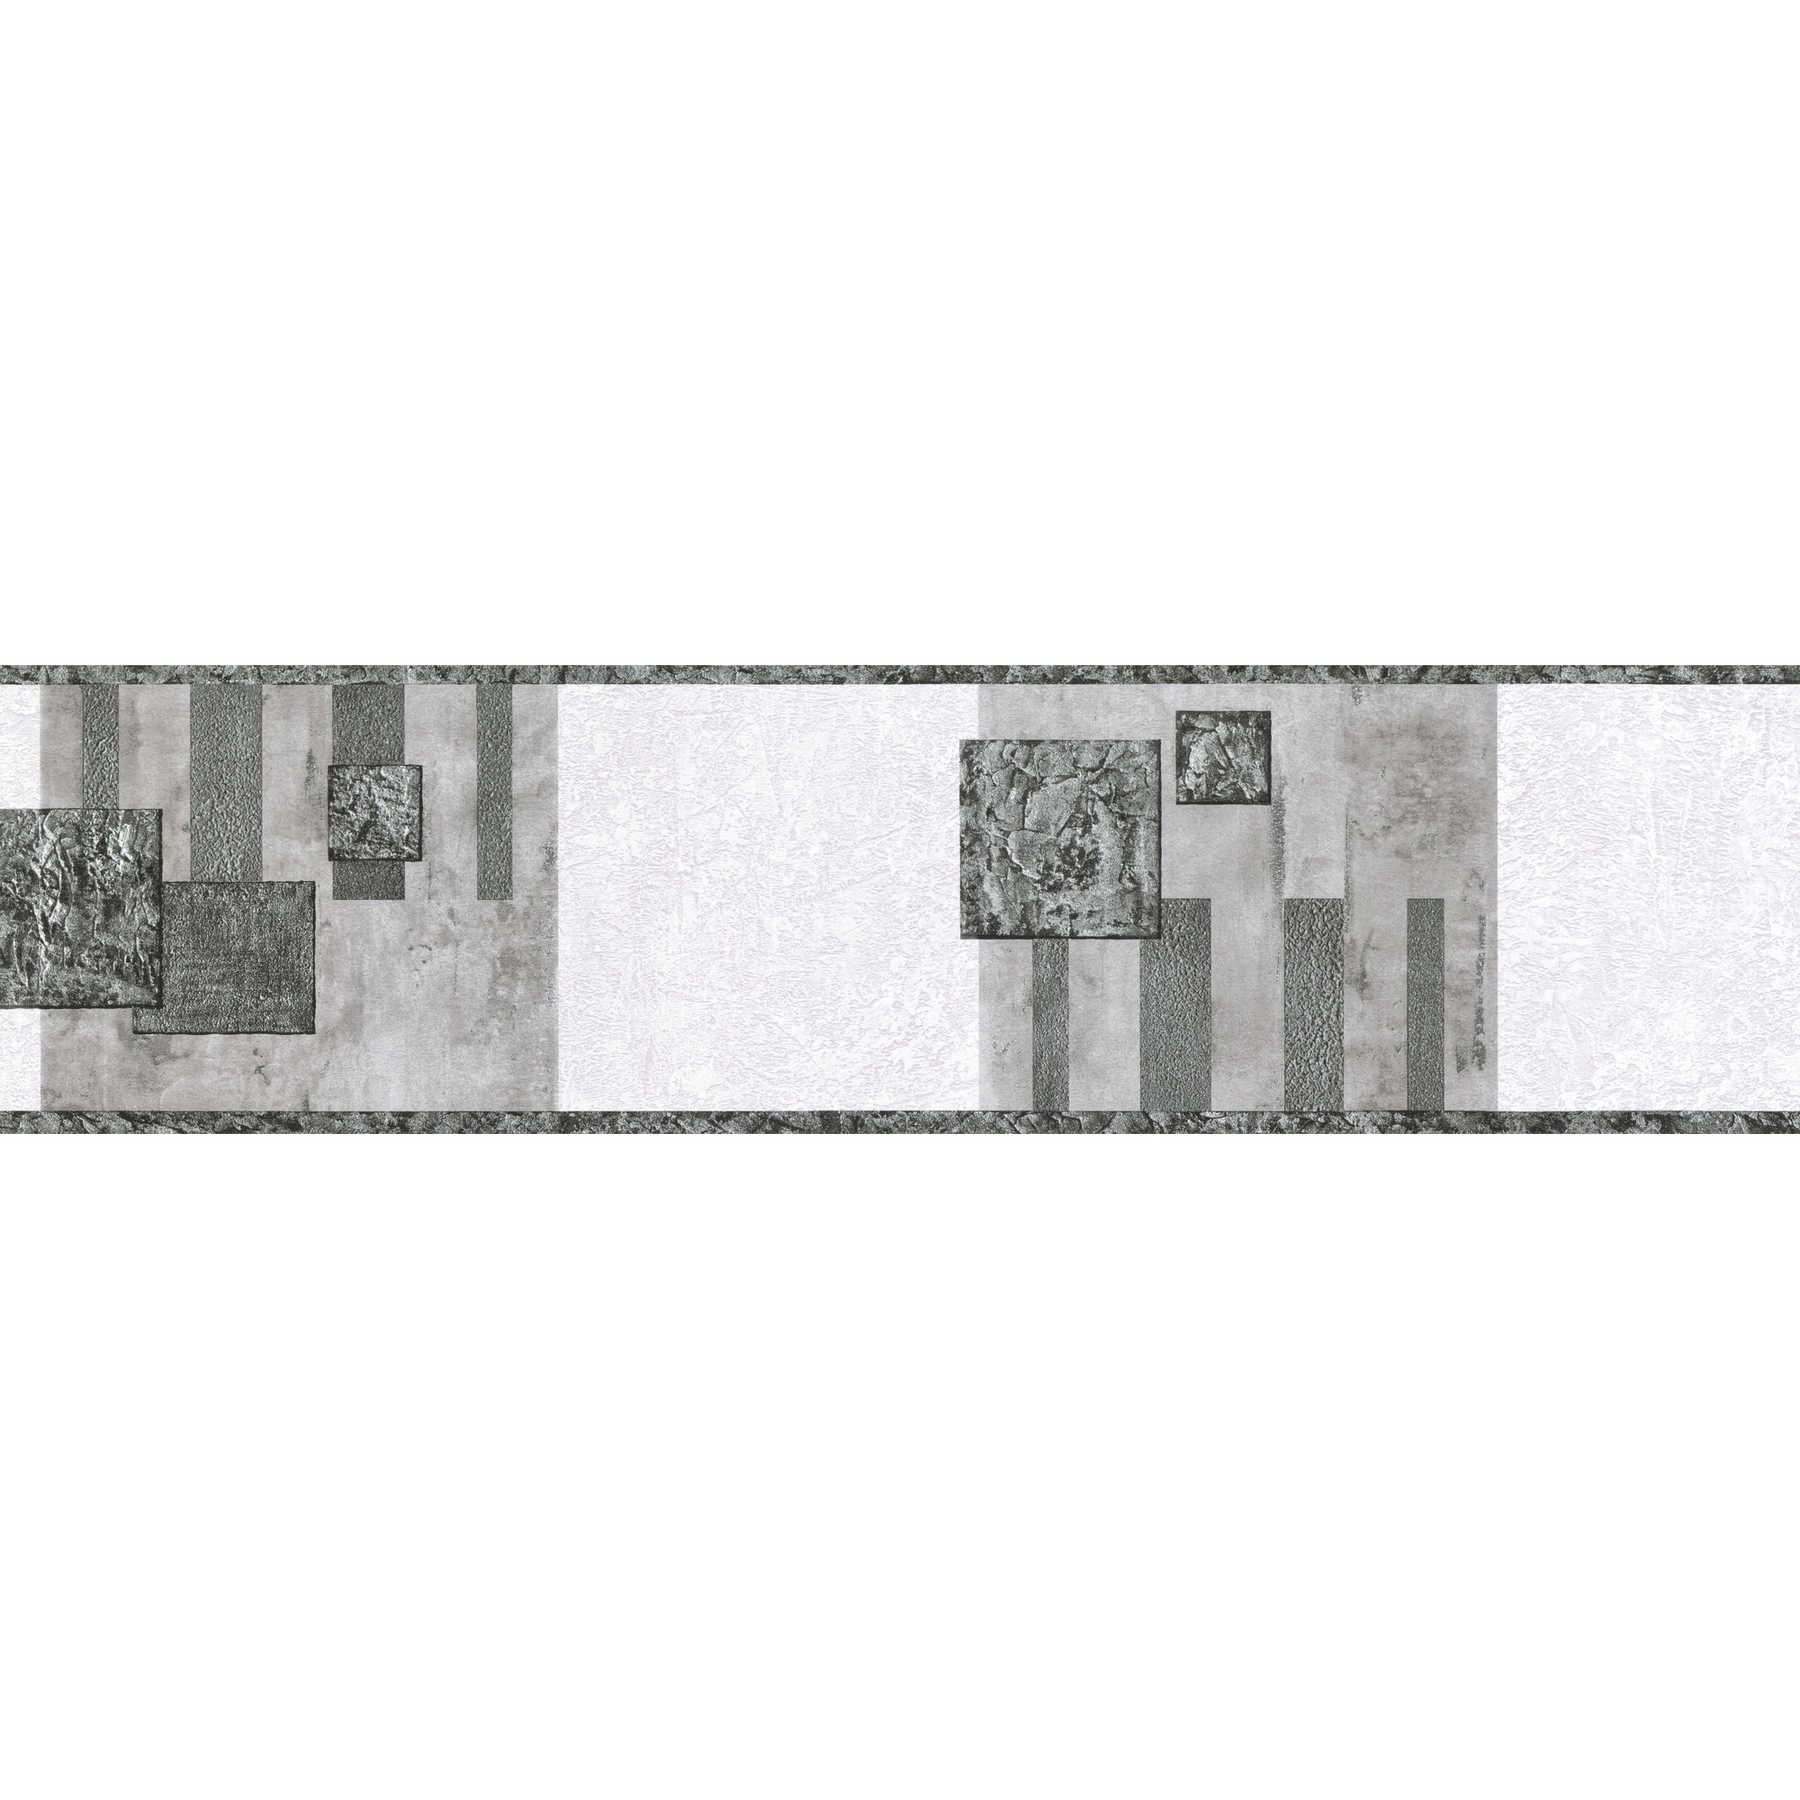         Self-adhesive wallpaper border abstract design - grey, white
    